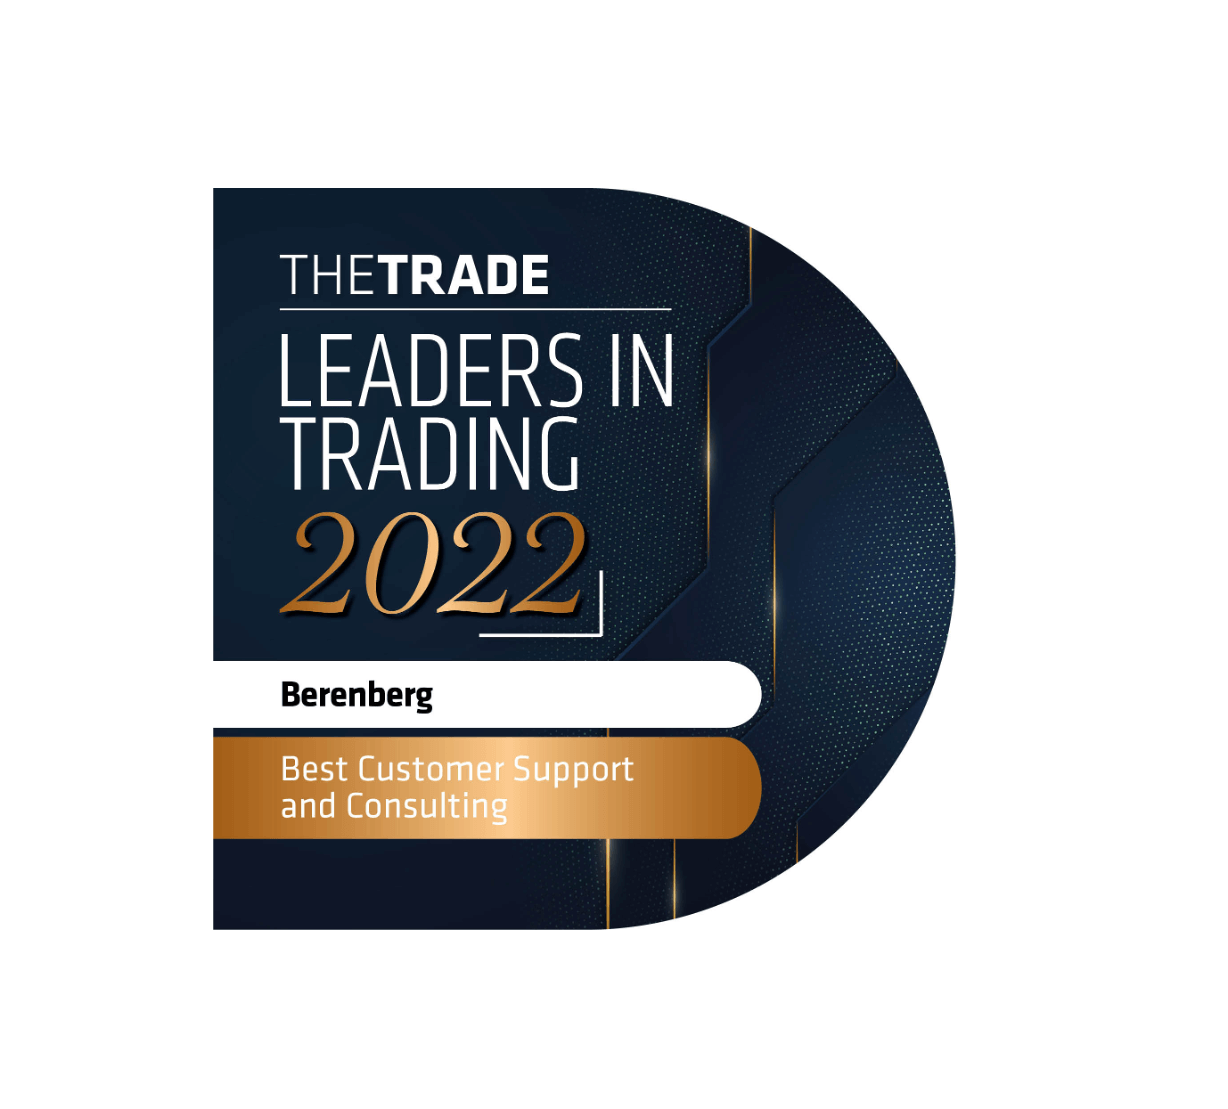 Berenberg Jobs - Careers Website - Awards - The Trade Customer Support Award Winner 2022 Image.png